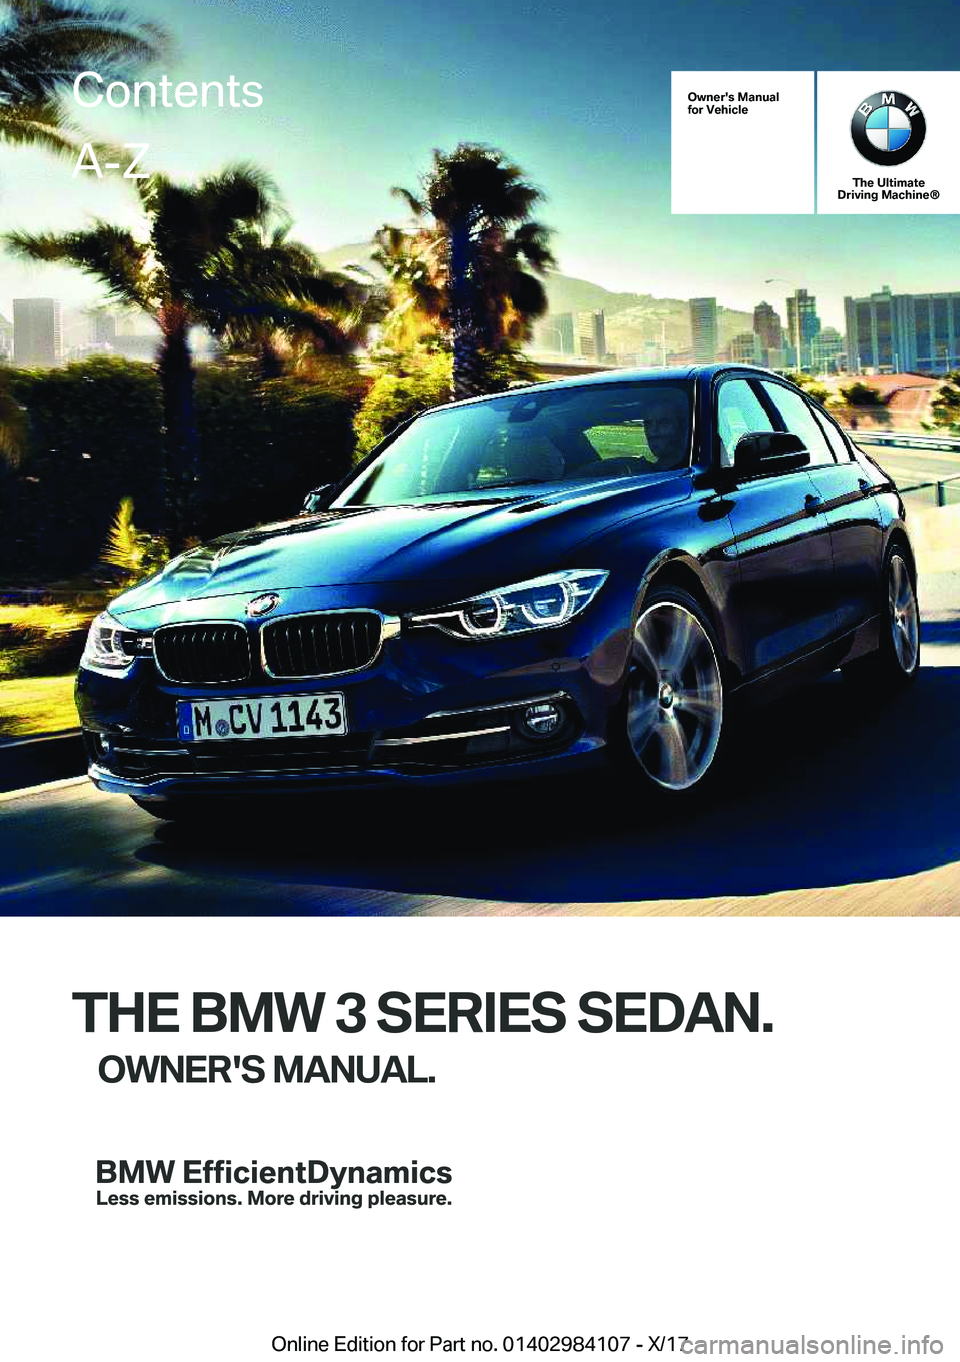 BMW 3 SERIES 2018  Owners Manual �O�w�n�e�r�'�s��M�a�n�u�a�l
�f�o�r��V�e�h�i�c�l�e
�T�h�e��U�l�t�i�m�a�t�e
�D�r�i�v�i�n�g��M�a�c�h�i�n�e�n
�T�H�E��B�M�W��3��S�E�R�I�E�S��S�E�D�A�N�.
�O�W�N�E�R�'�S��M�A�N�U�A�L�.
�C�o